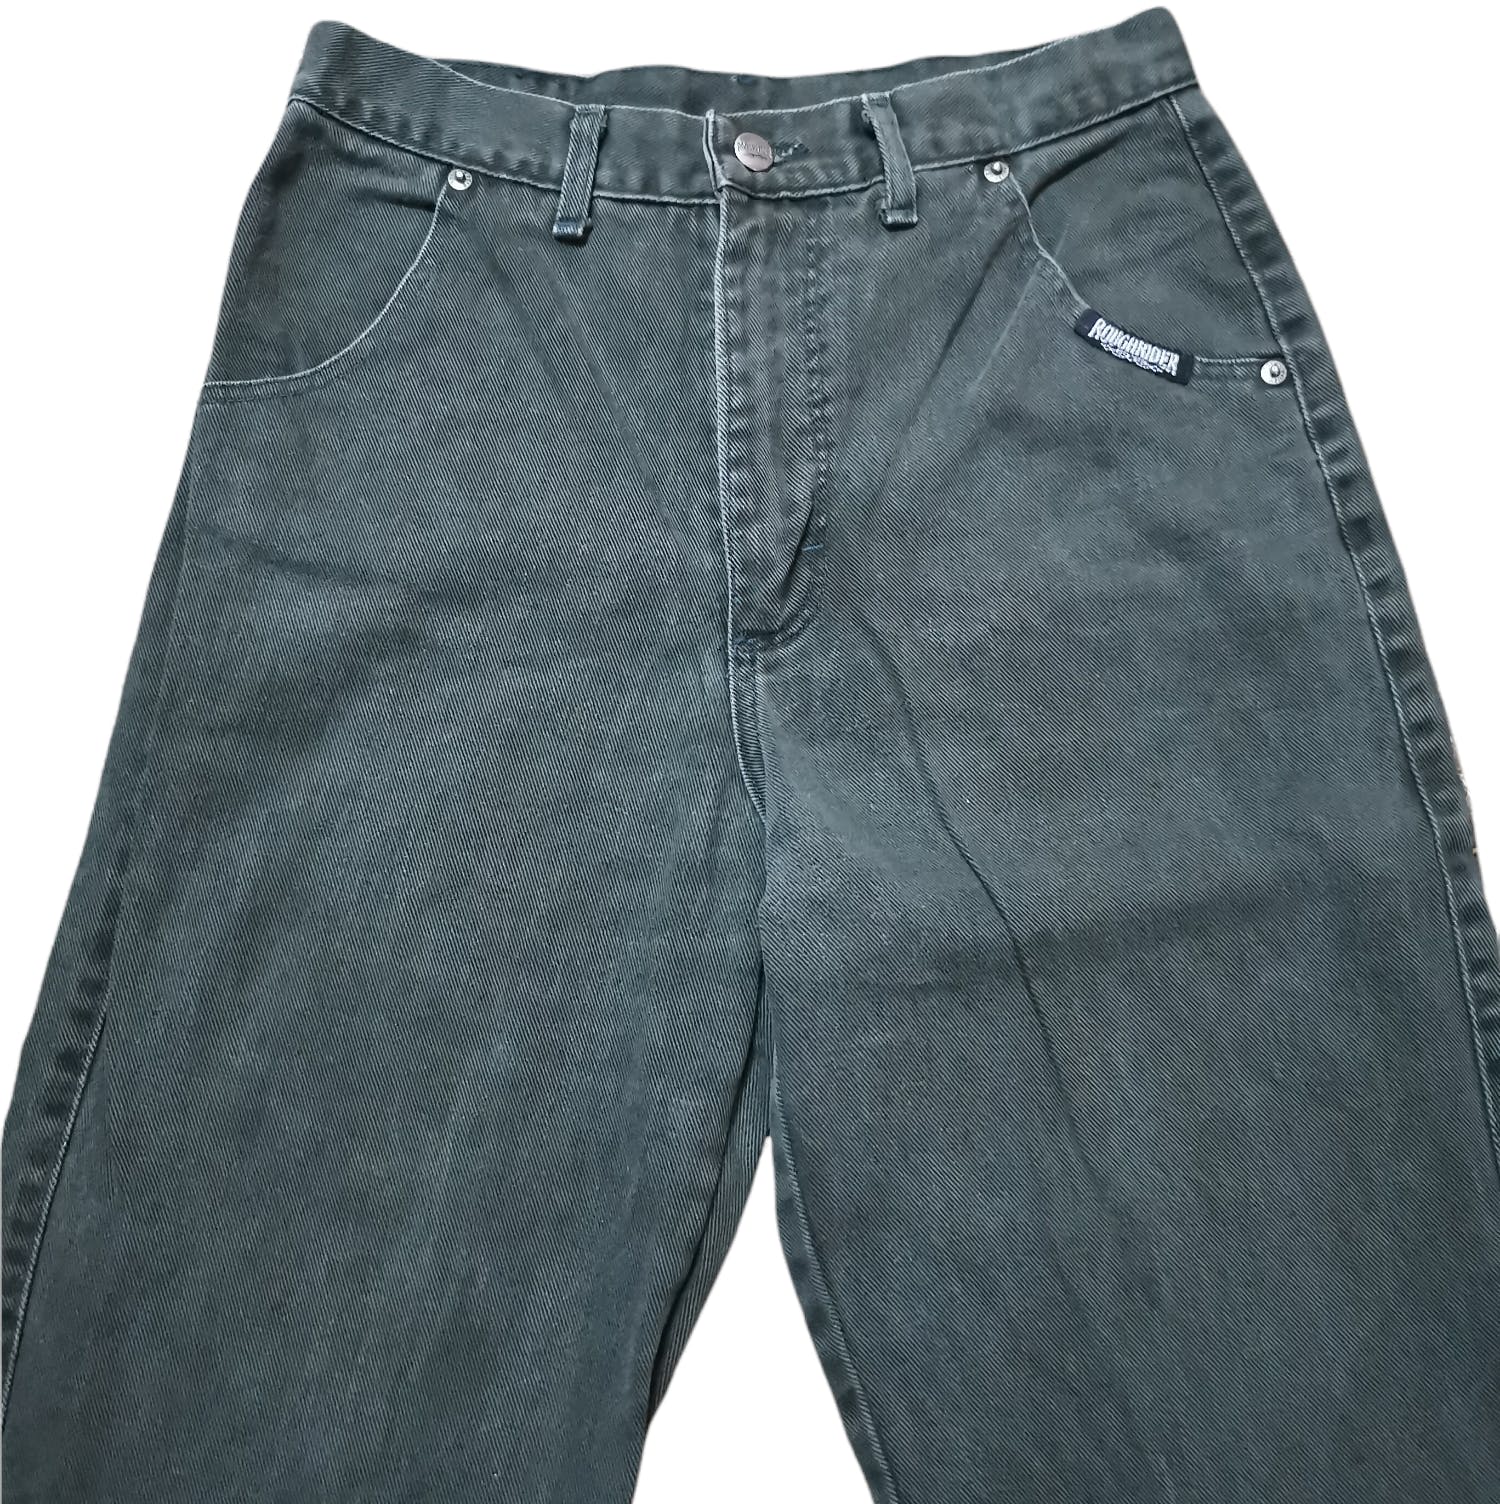 Vintage Roughrider Jeans x Talon Zipper - 3